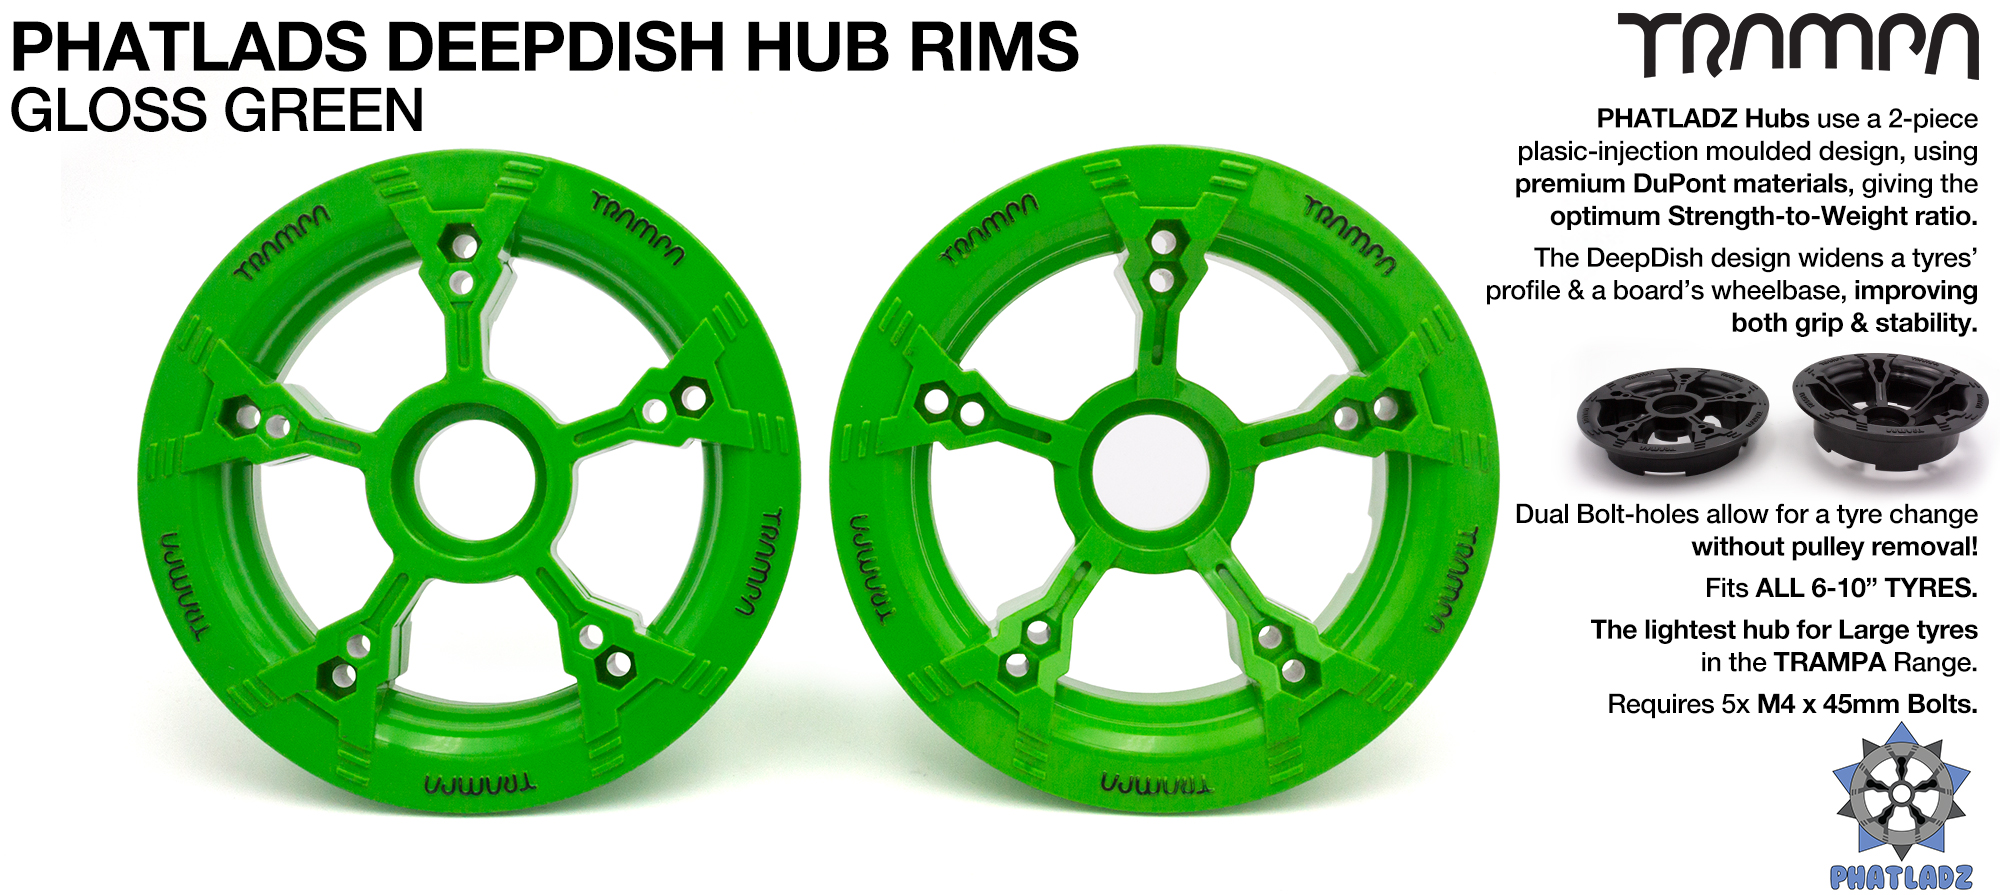 PHATLADS - 5 Spoke Hub Deep Dish Split Rim hub natural GREEN with Black Logo fits 6,7,8,9 & 10 Inch tyres!! Amazing - NO BOLTS 